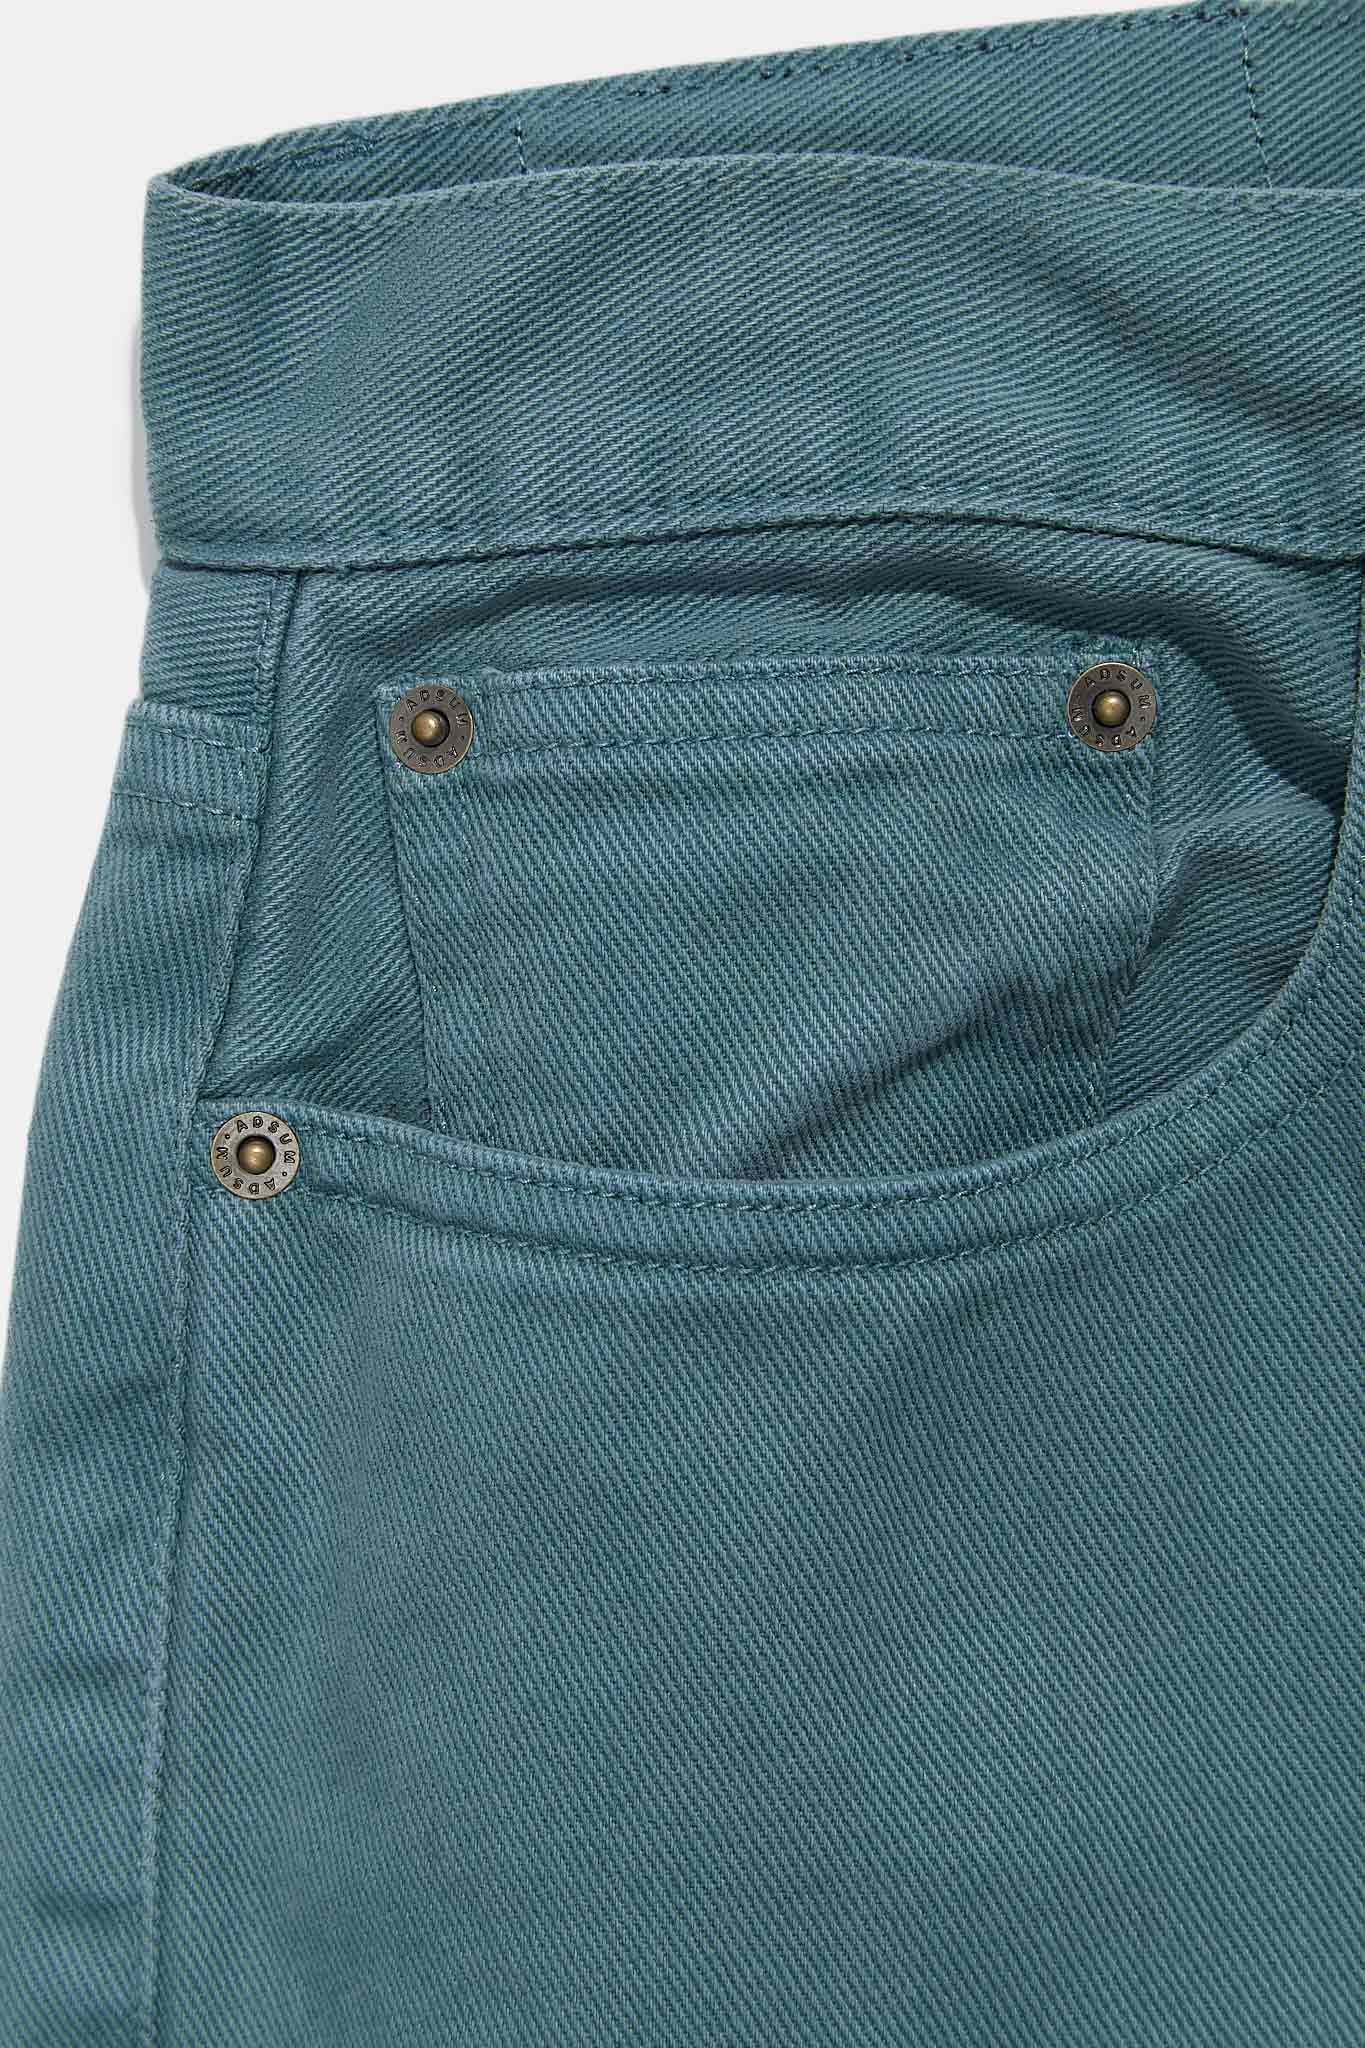 Overdyed 5 Pocket Jean - Gazer Slate / Adsum